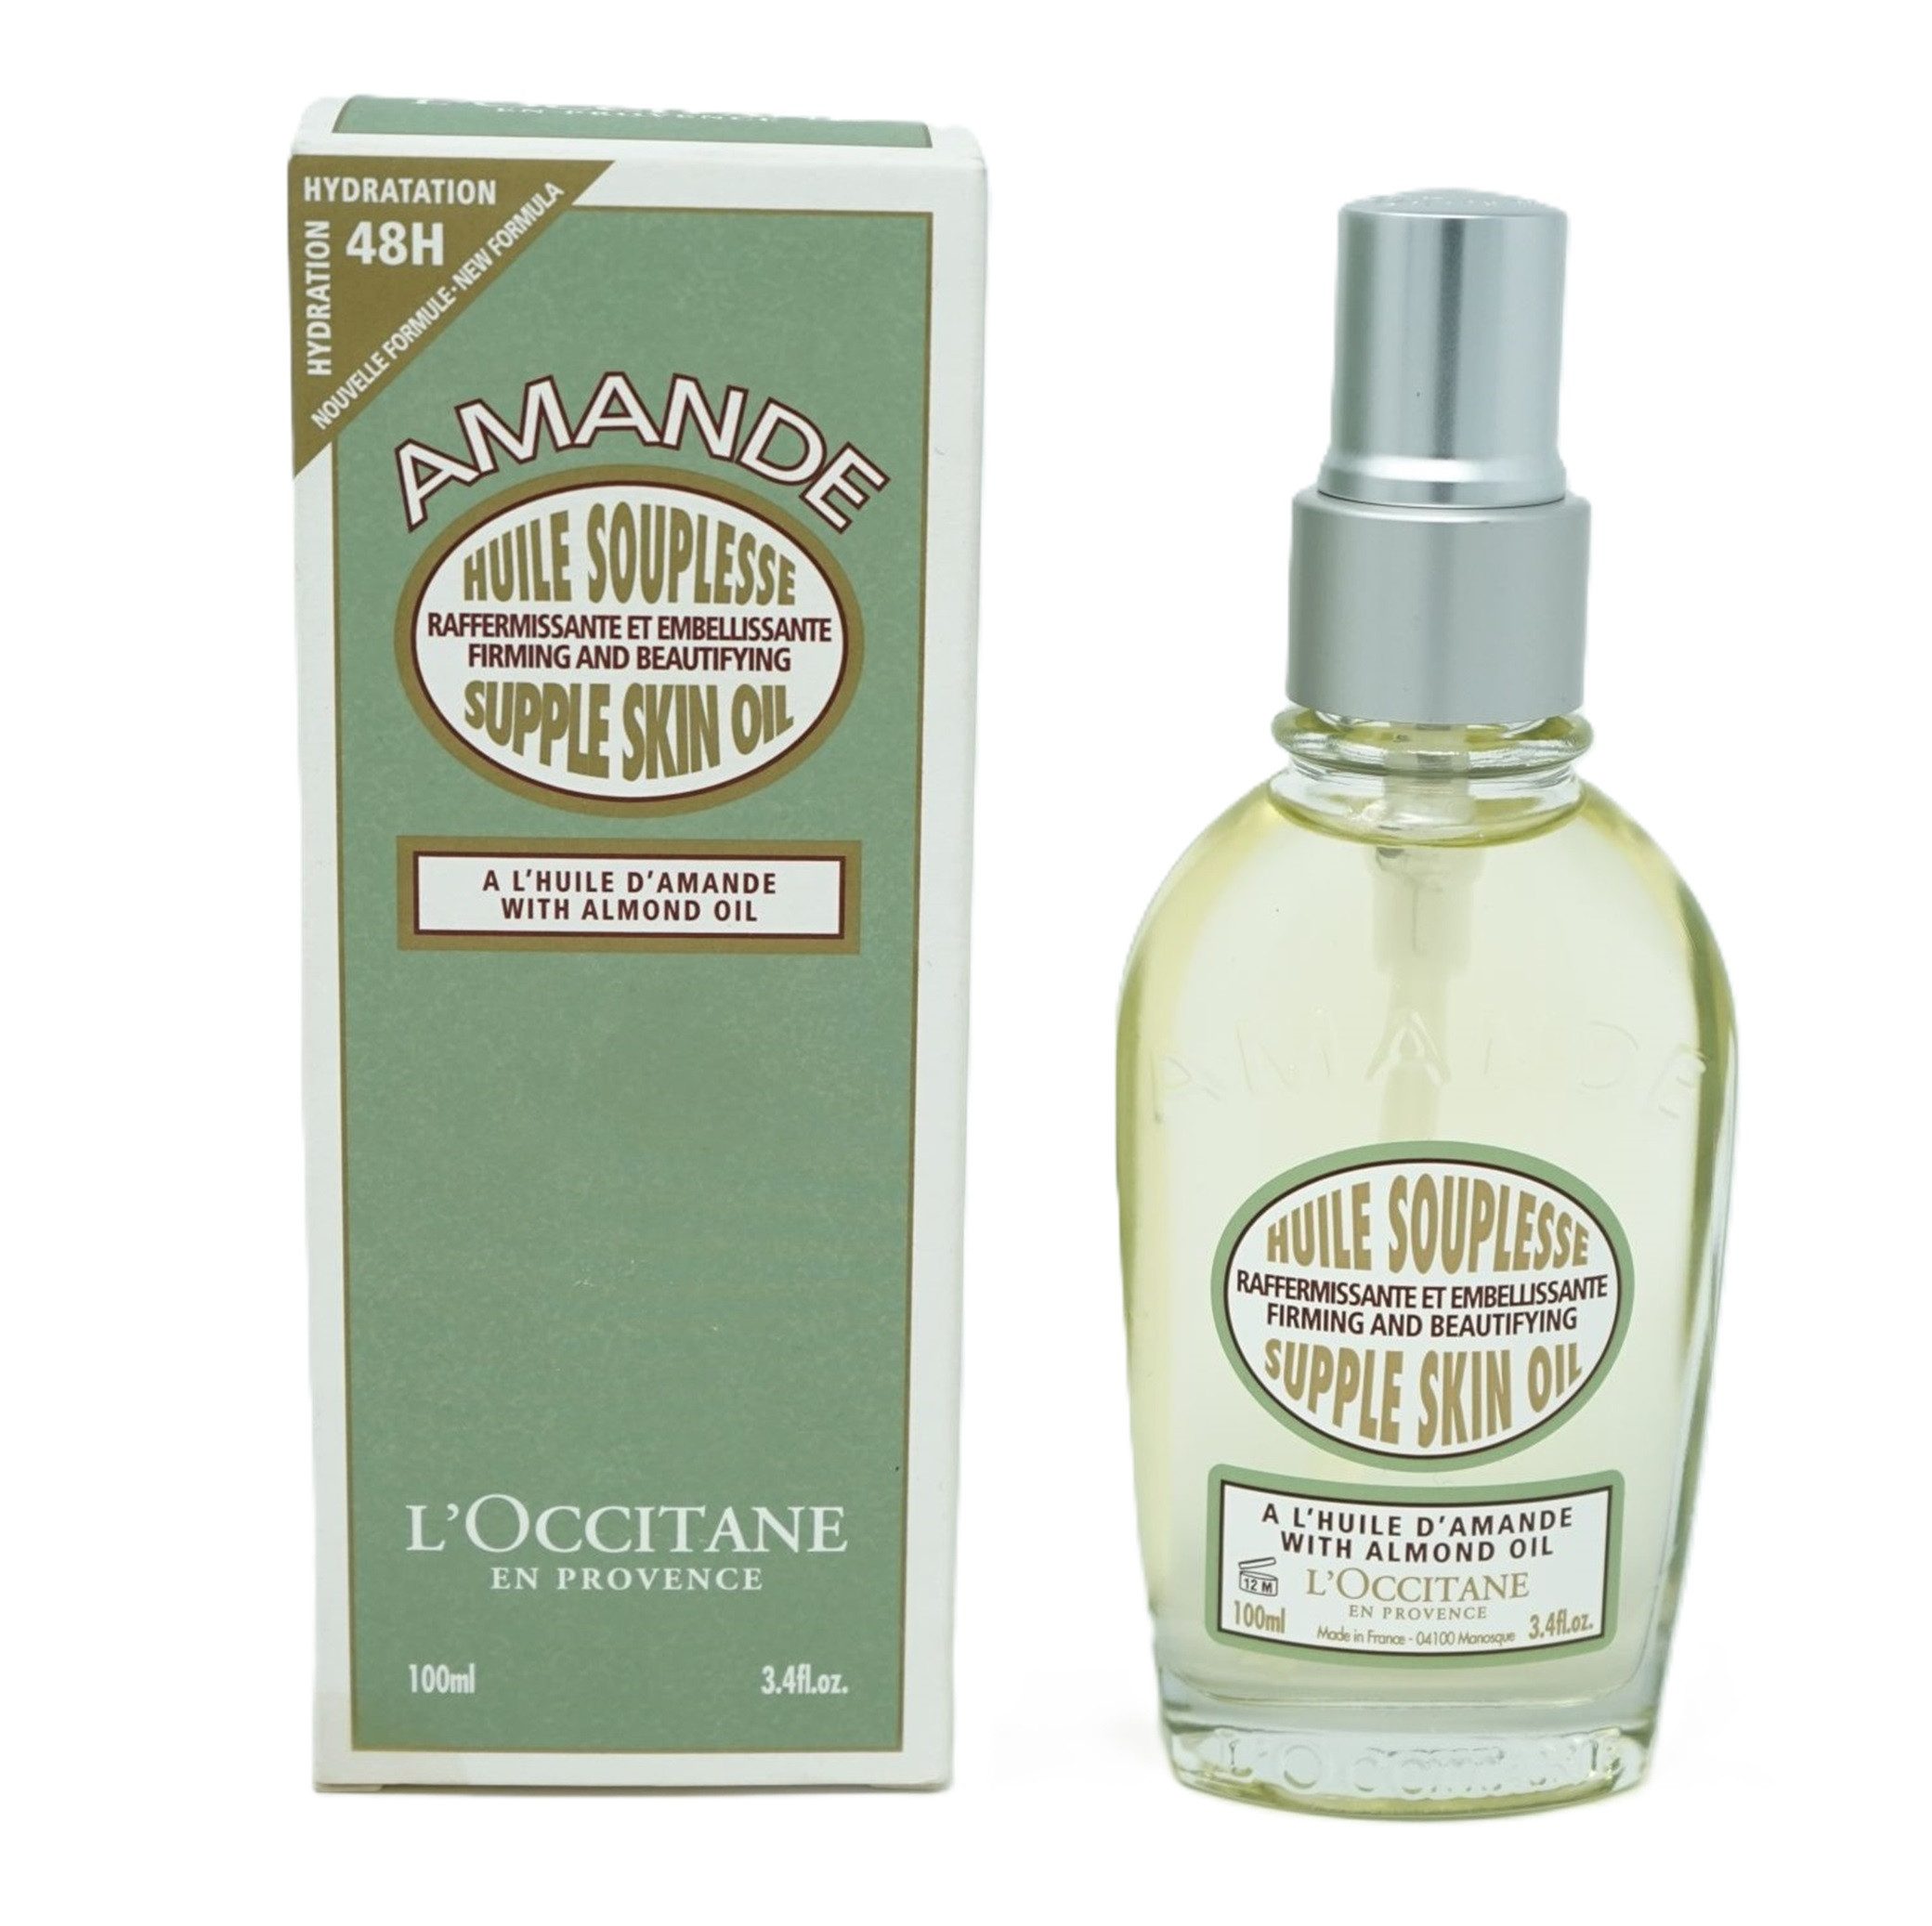 L'OCCITANE Körperöl Loccitane Almond Supple Skin Oil Smoothing Beautifying 100ml